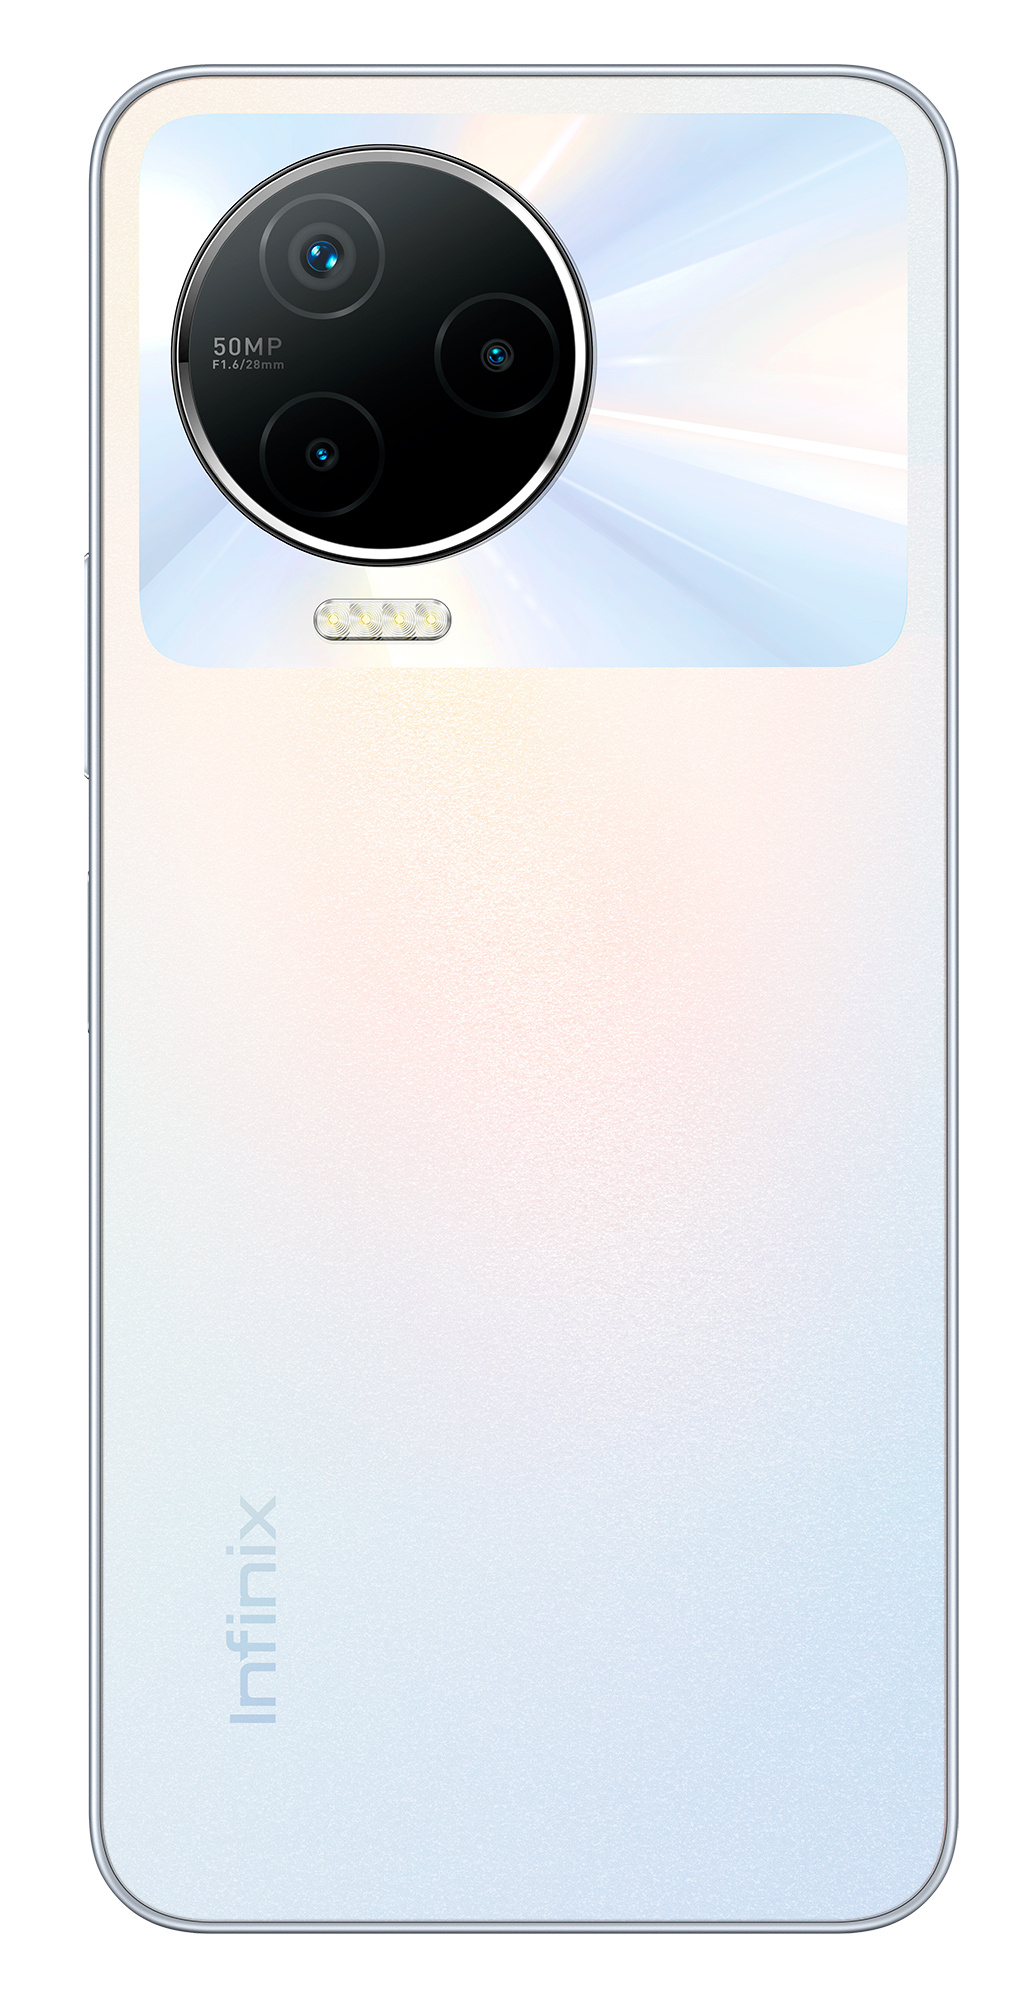 Смартфон Infinix X676C Note 12 2023 128Gb 8Gb белый моноблок 3G 4G 2Sim 6.7